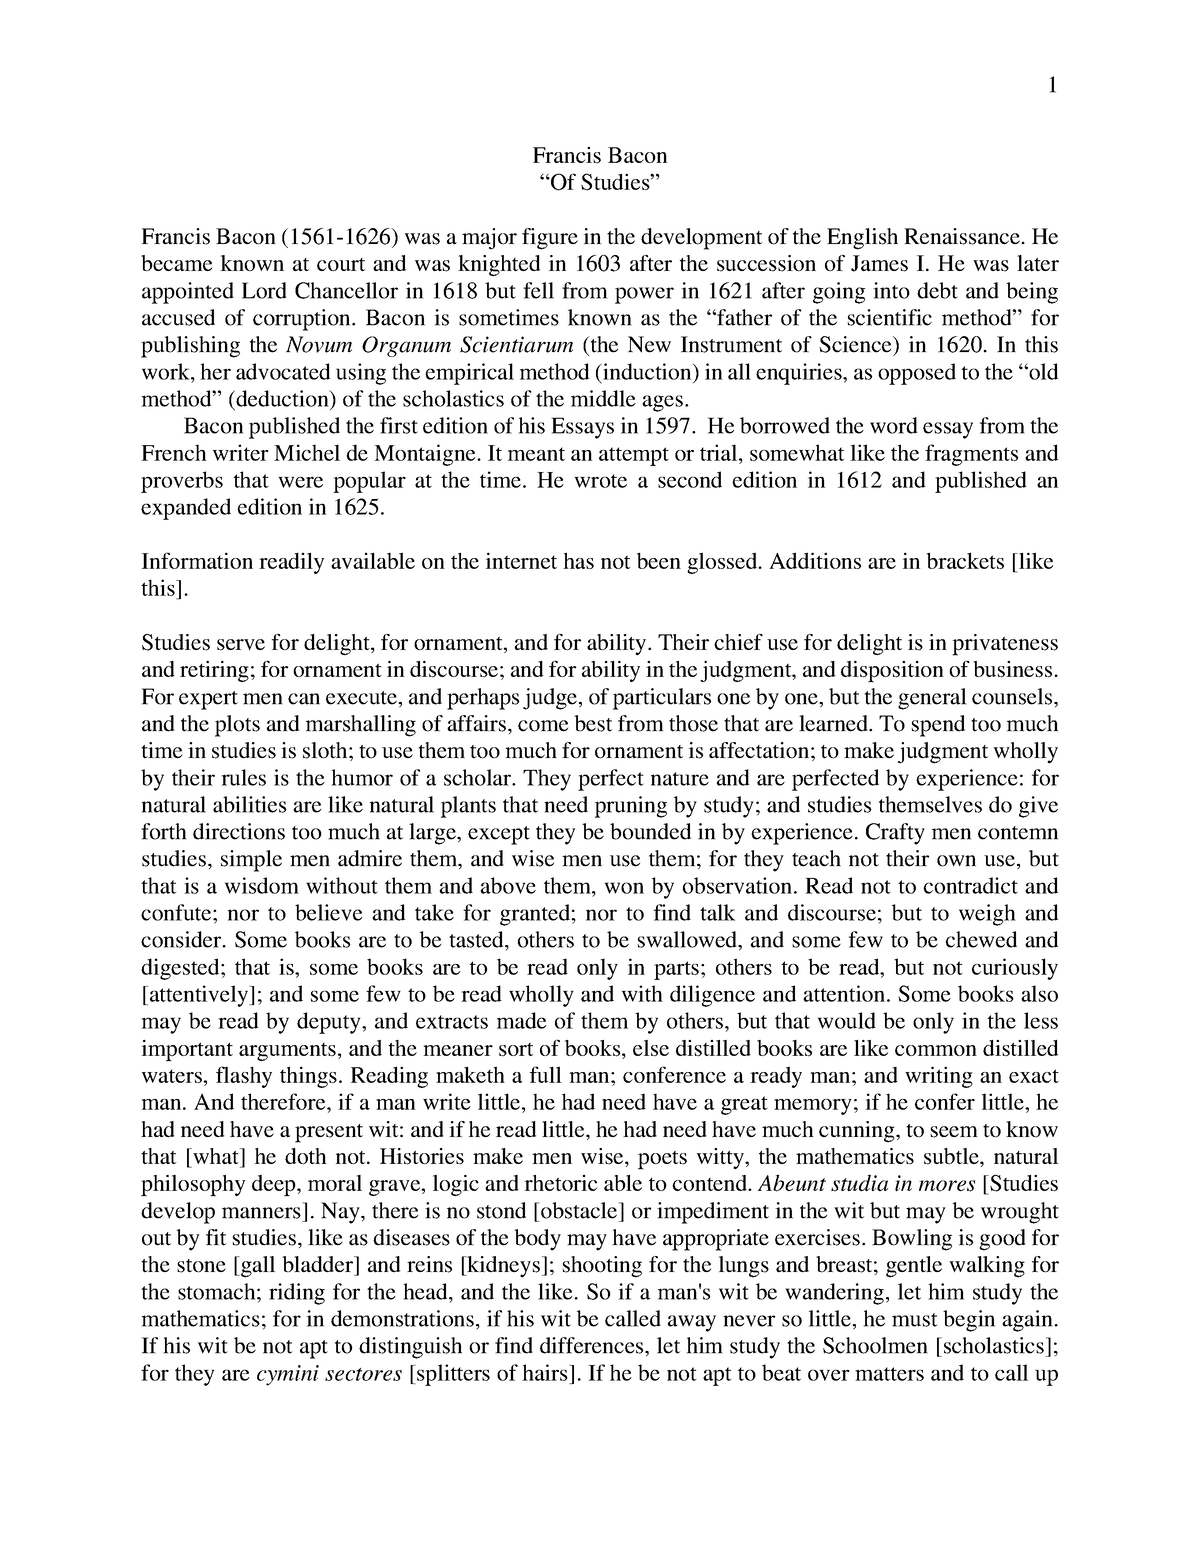 francis bacon of studies essay pdf